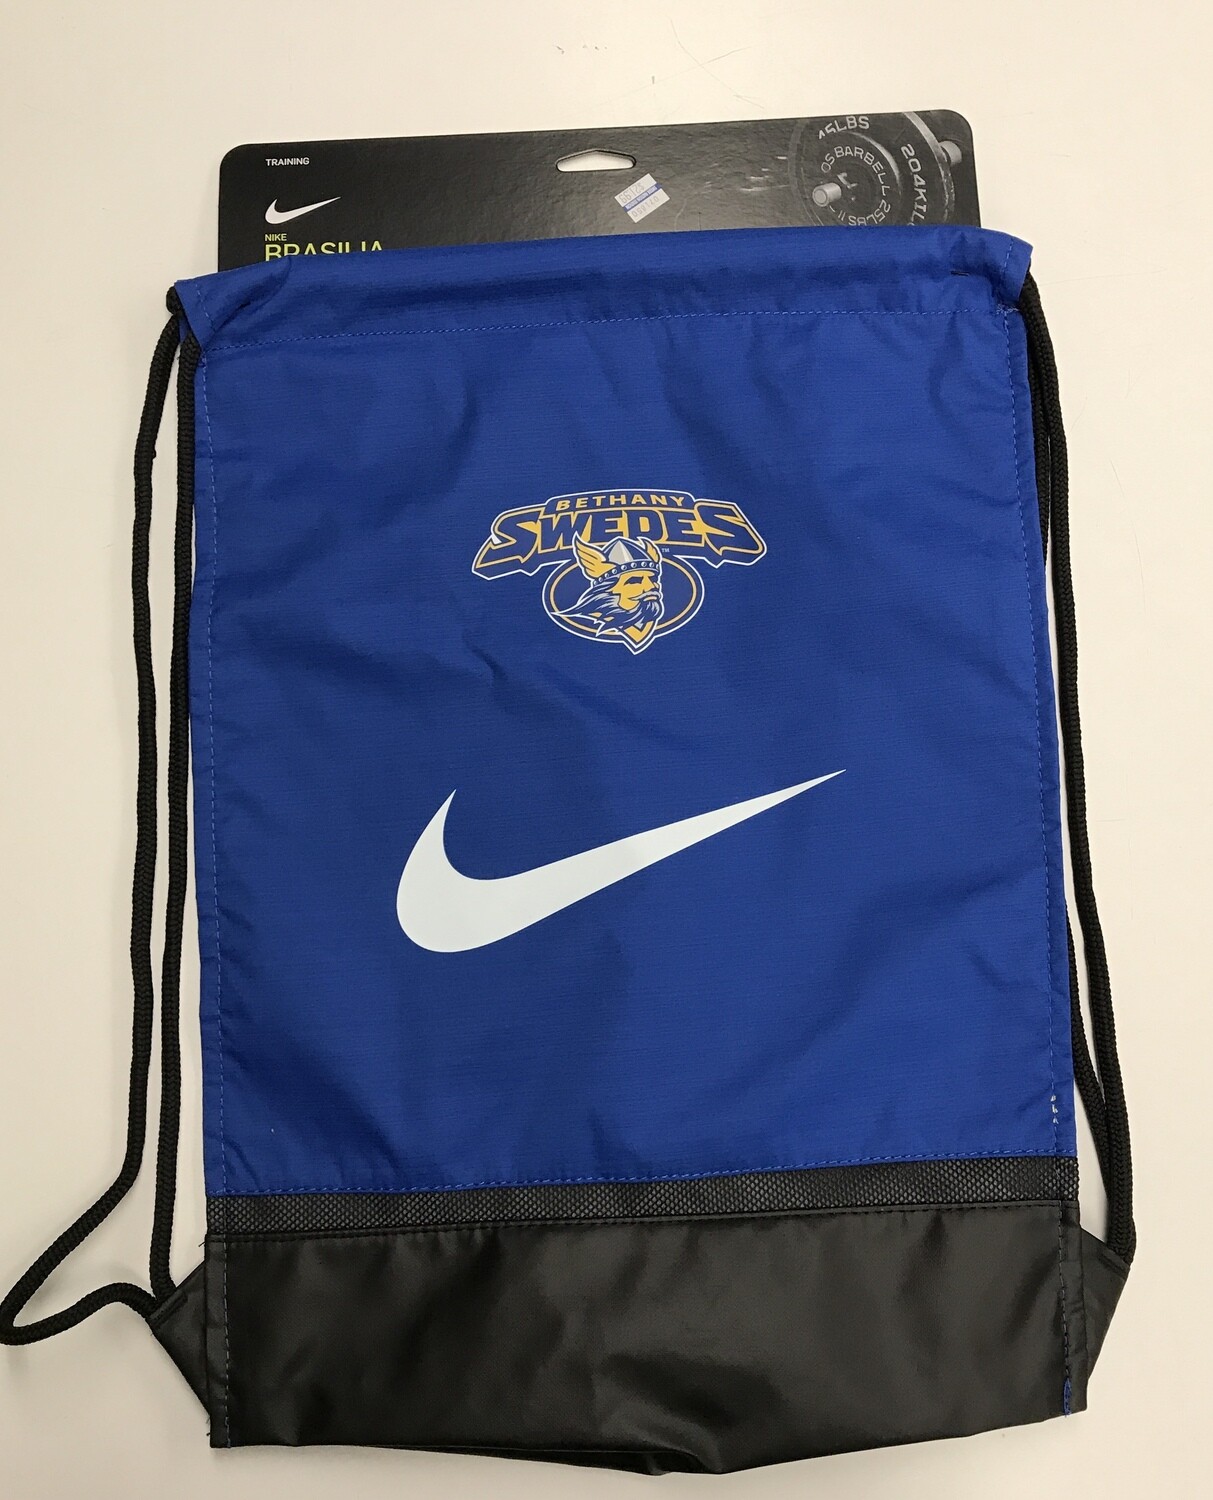 Nike Training Bag